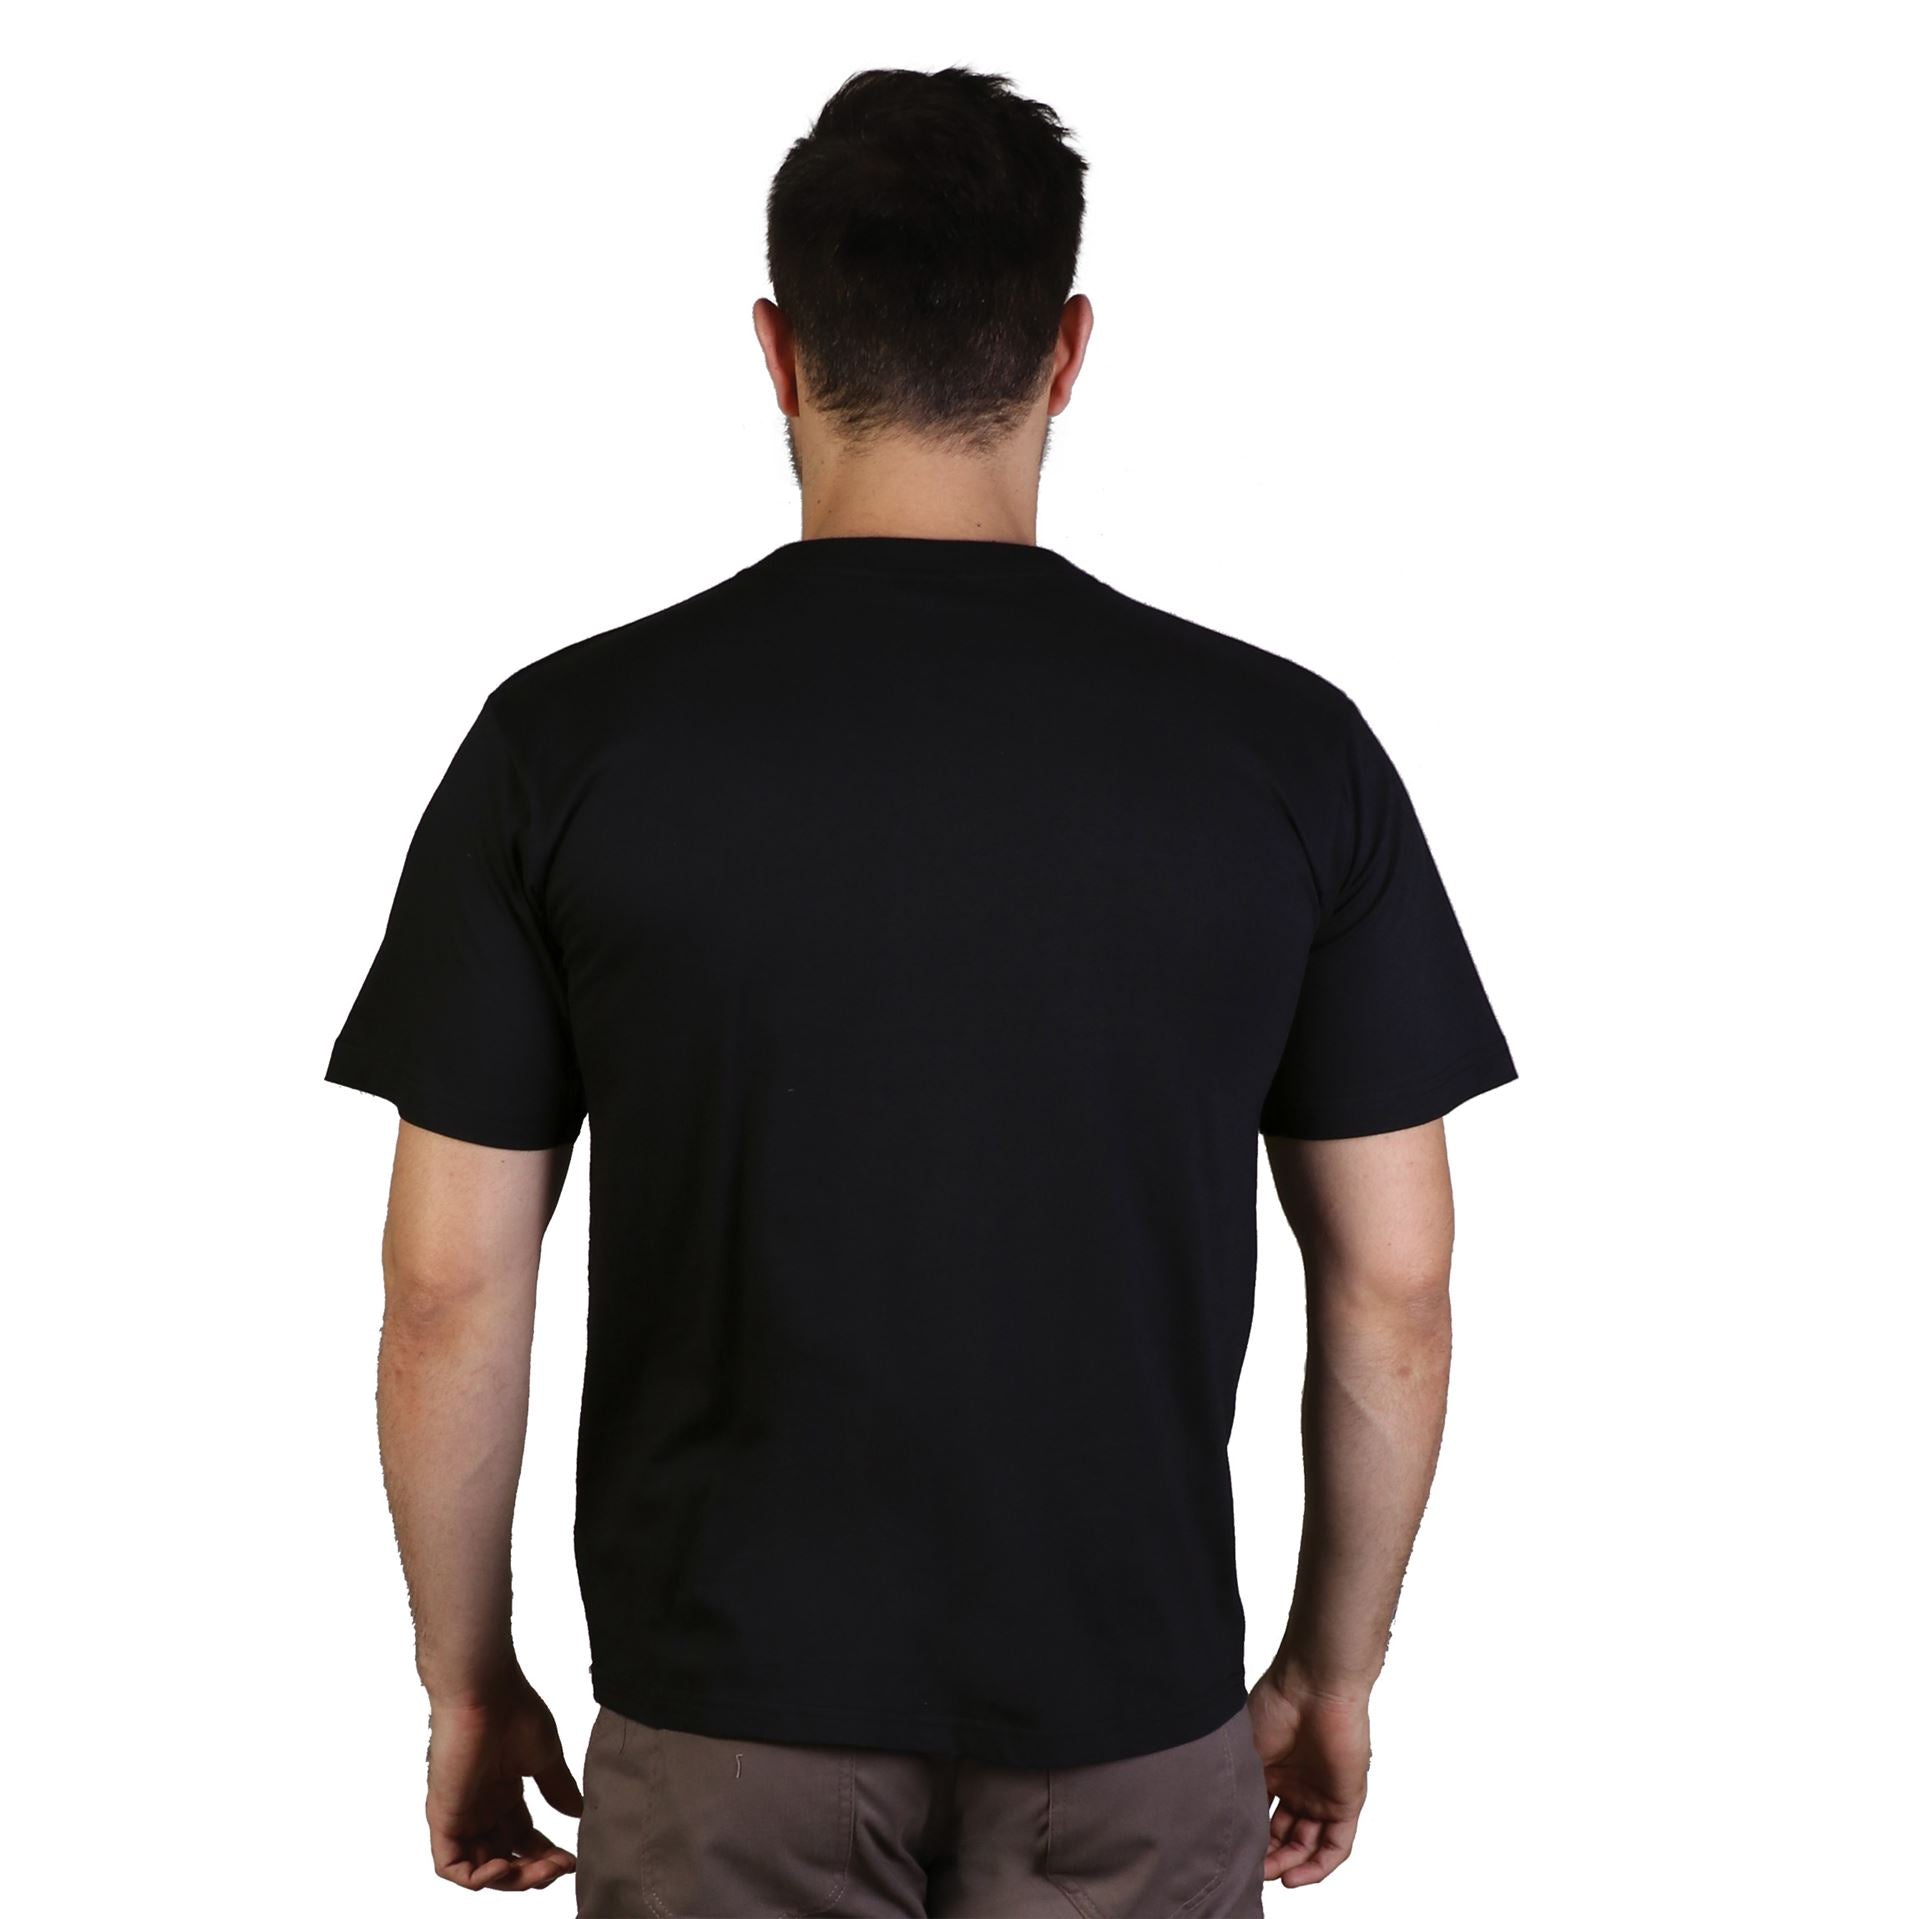 170g Combed Cotton V-neck T-shirt